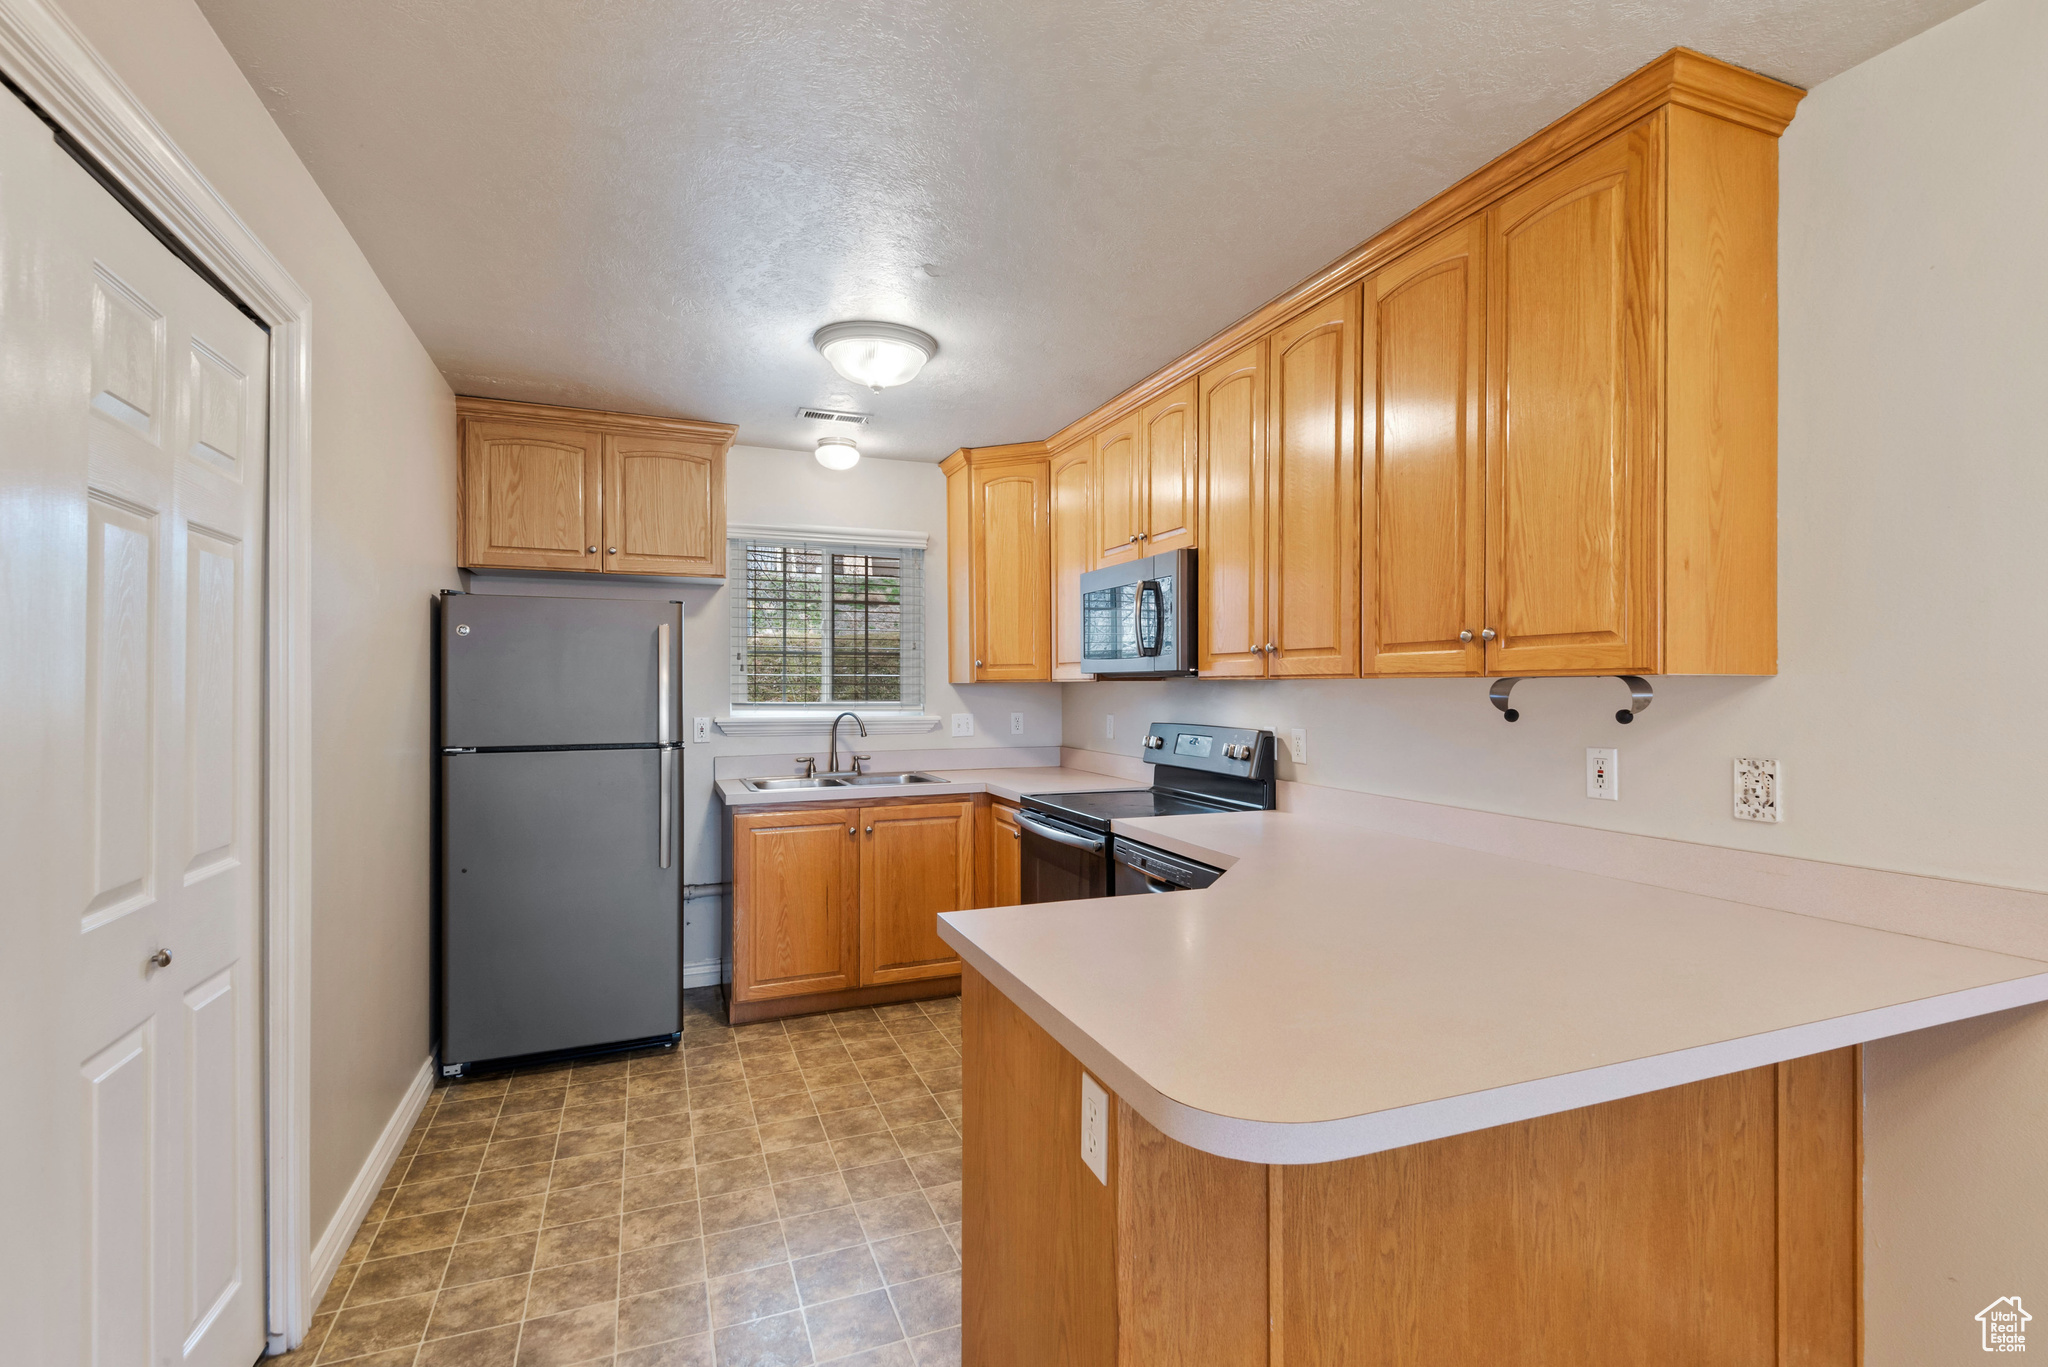 Kitchen featuring sink, stainless steel appliances, light tile flooring, and kitchen peninsula